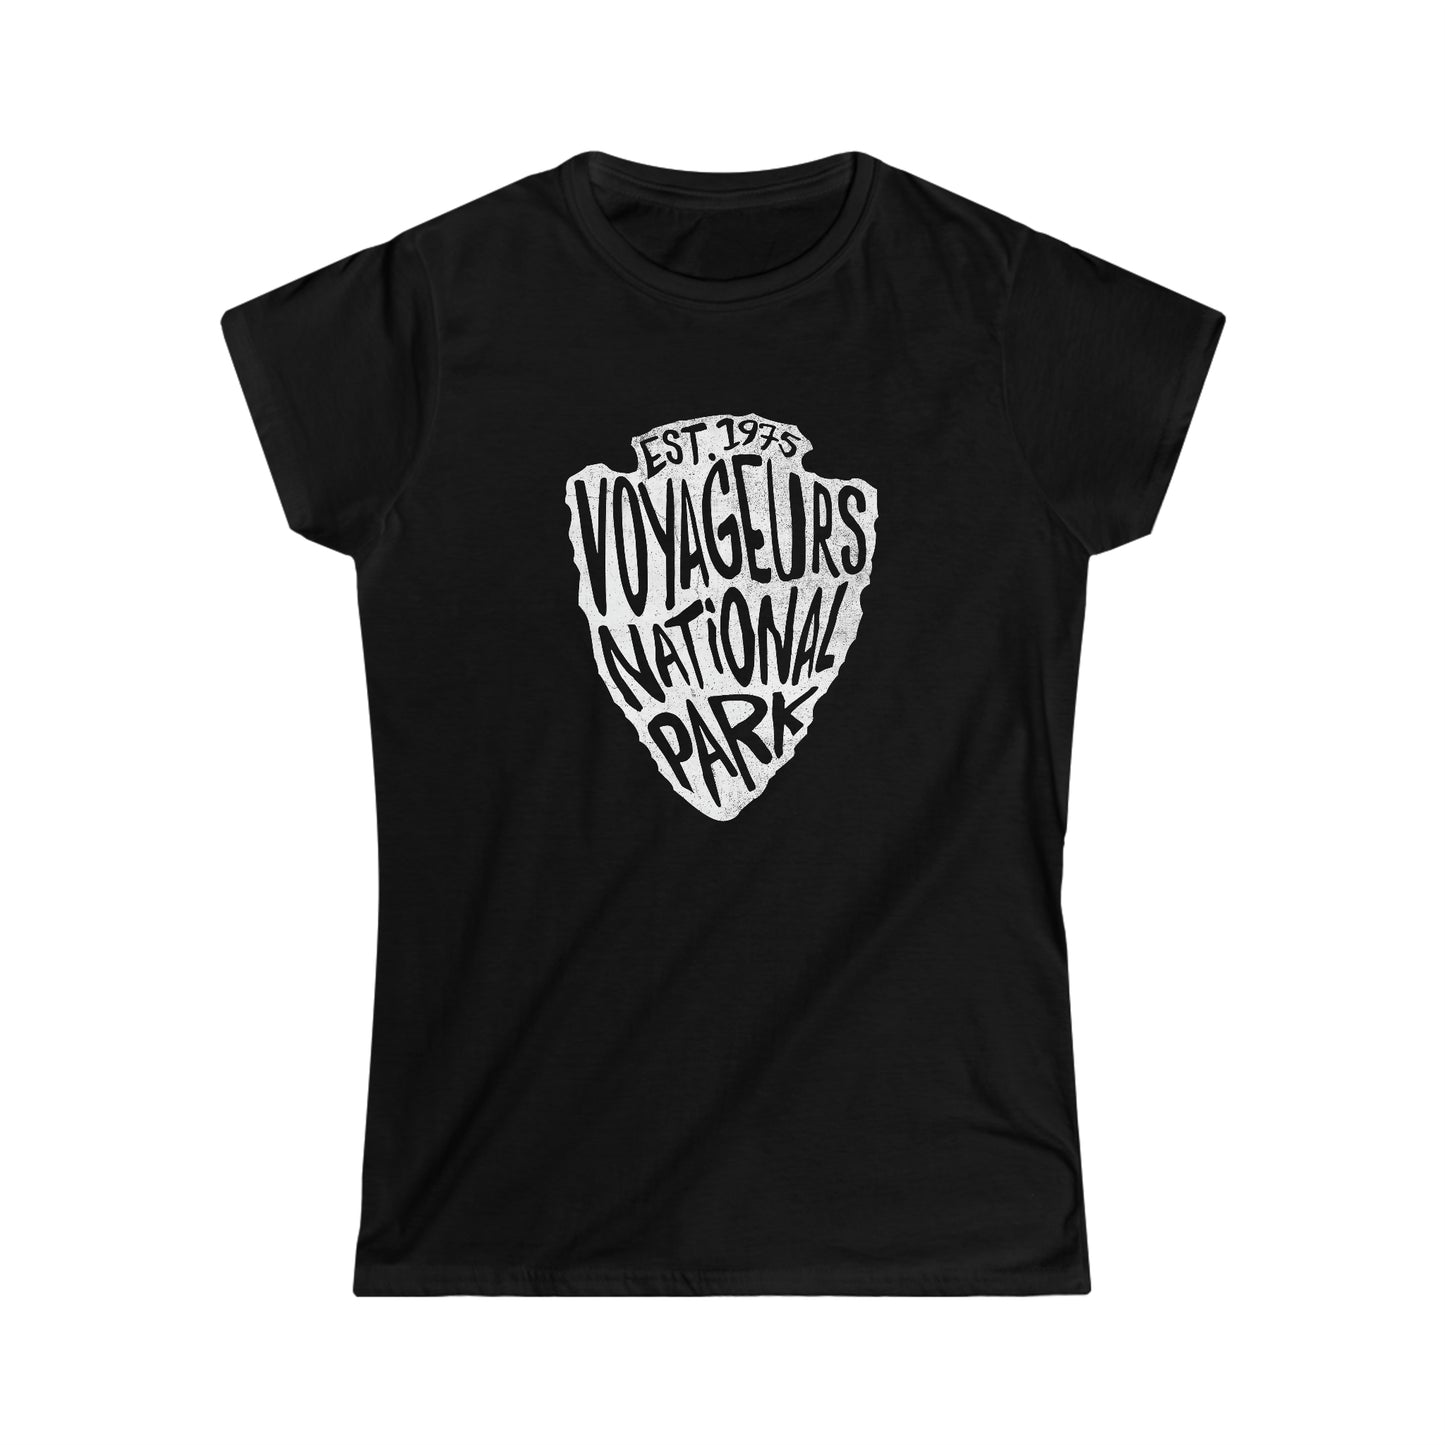 Voyageurs National Park Women's T-Shirt - Arrowhead Design